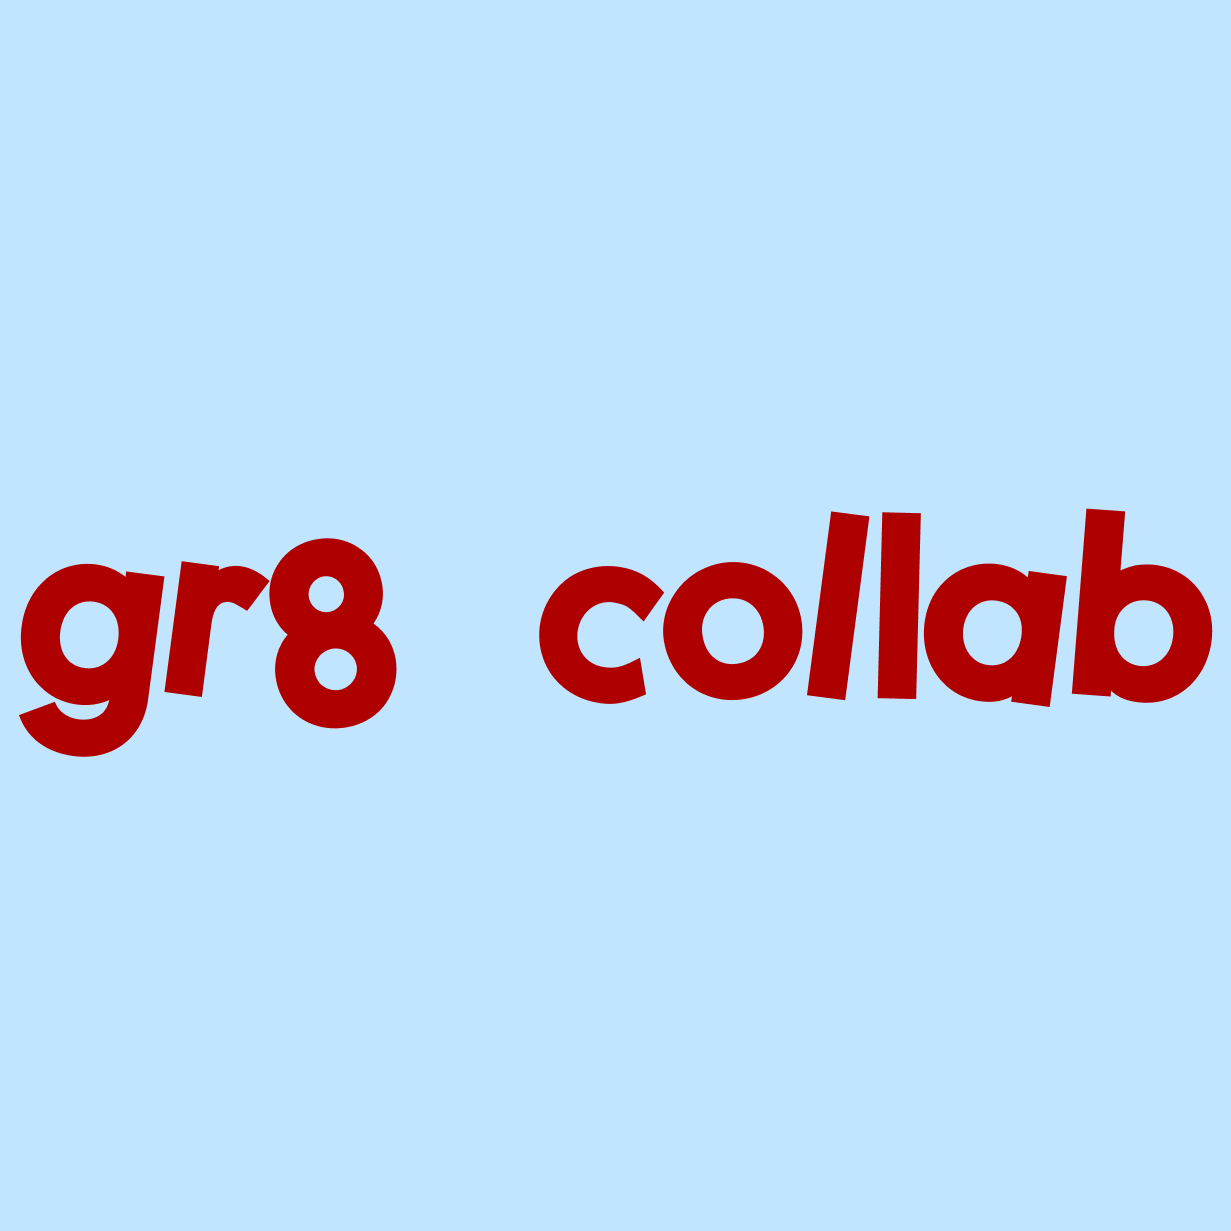 gr8 collab